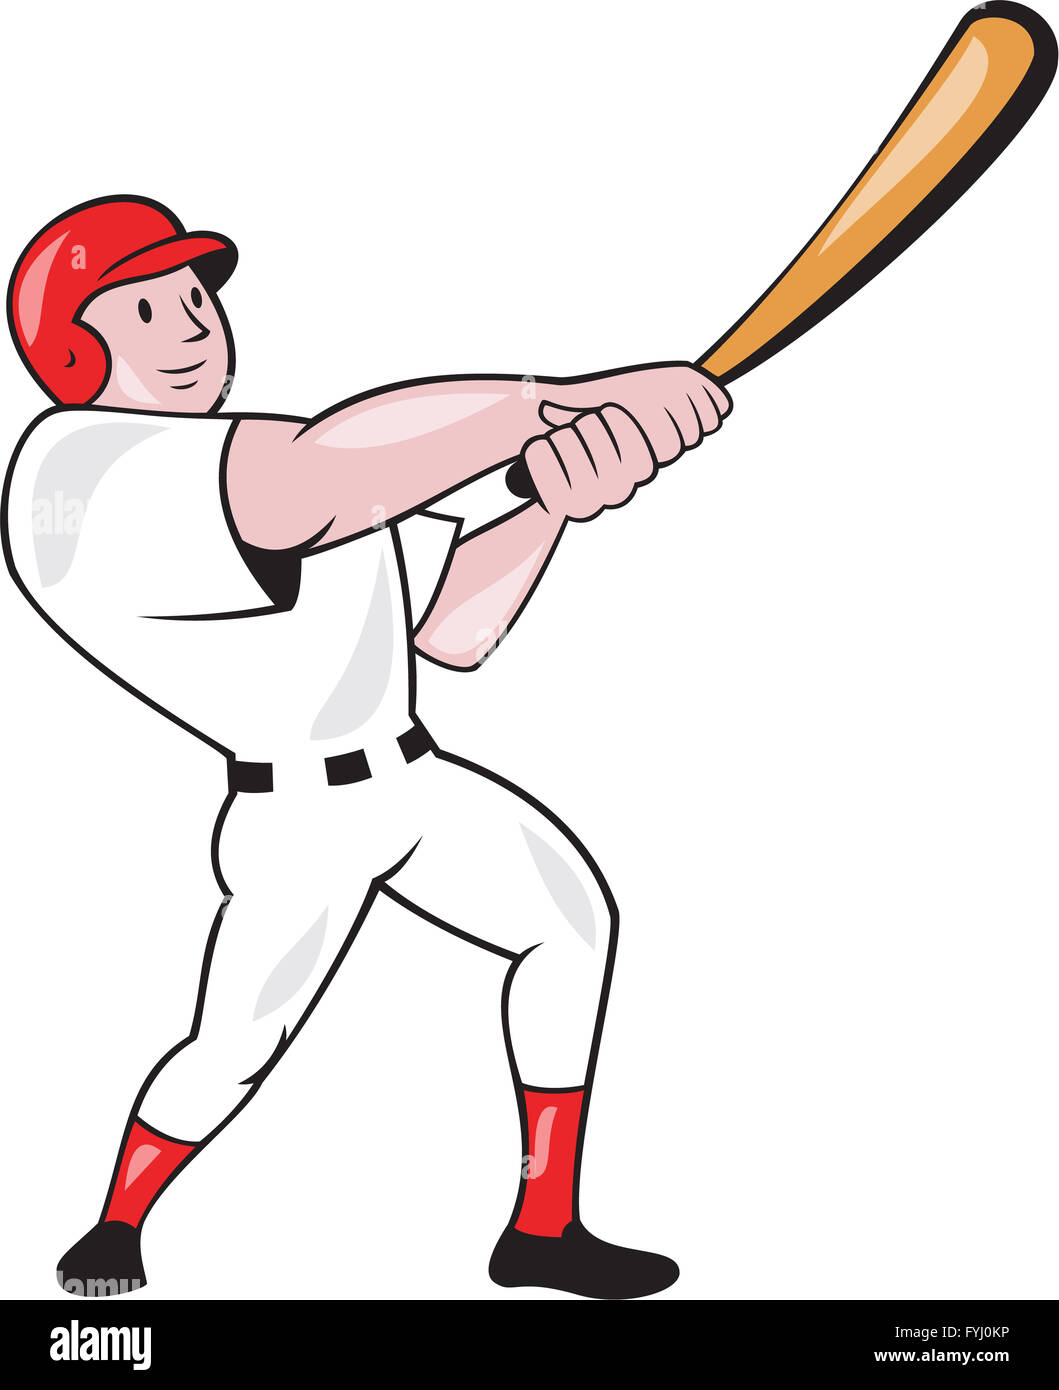 Baseball Player Swinging Bat Cartoon Stock Photo - Alamy